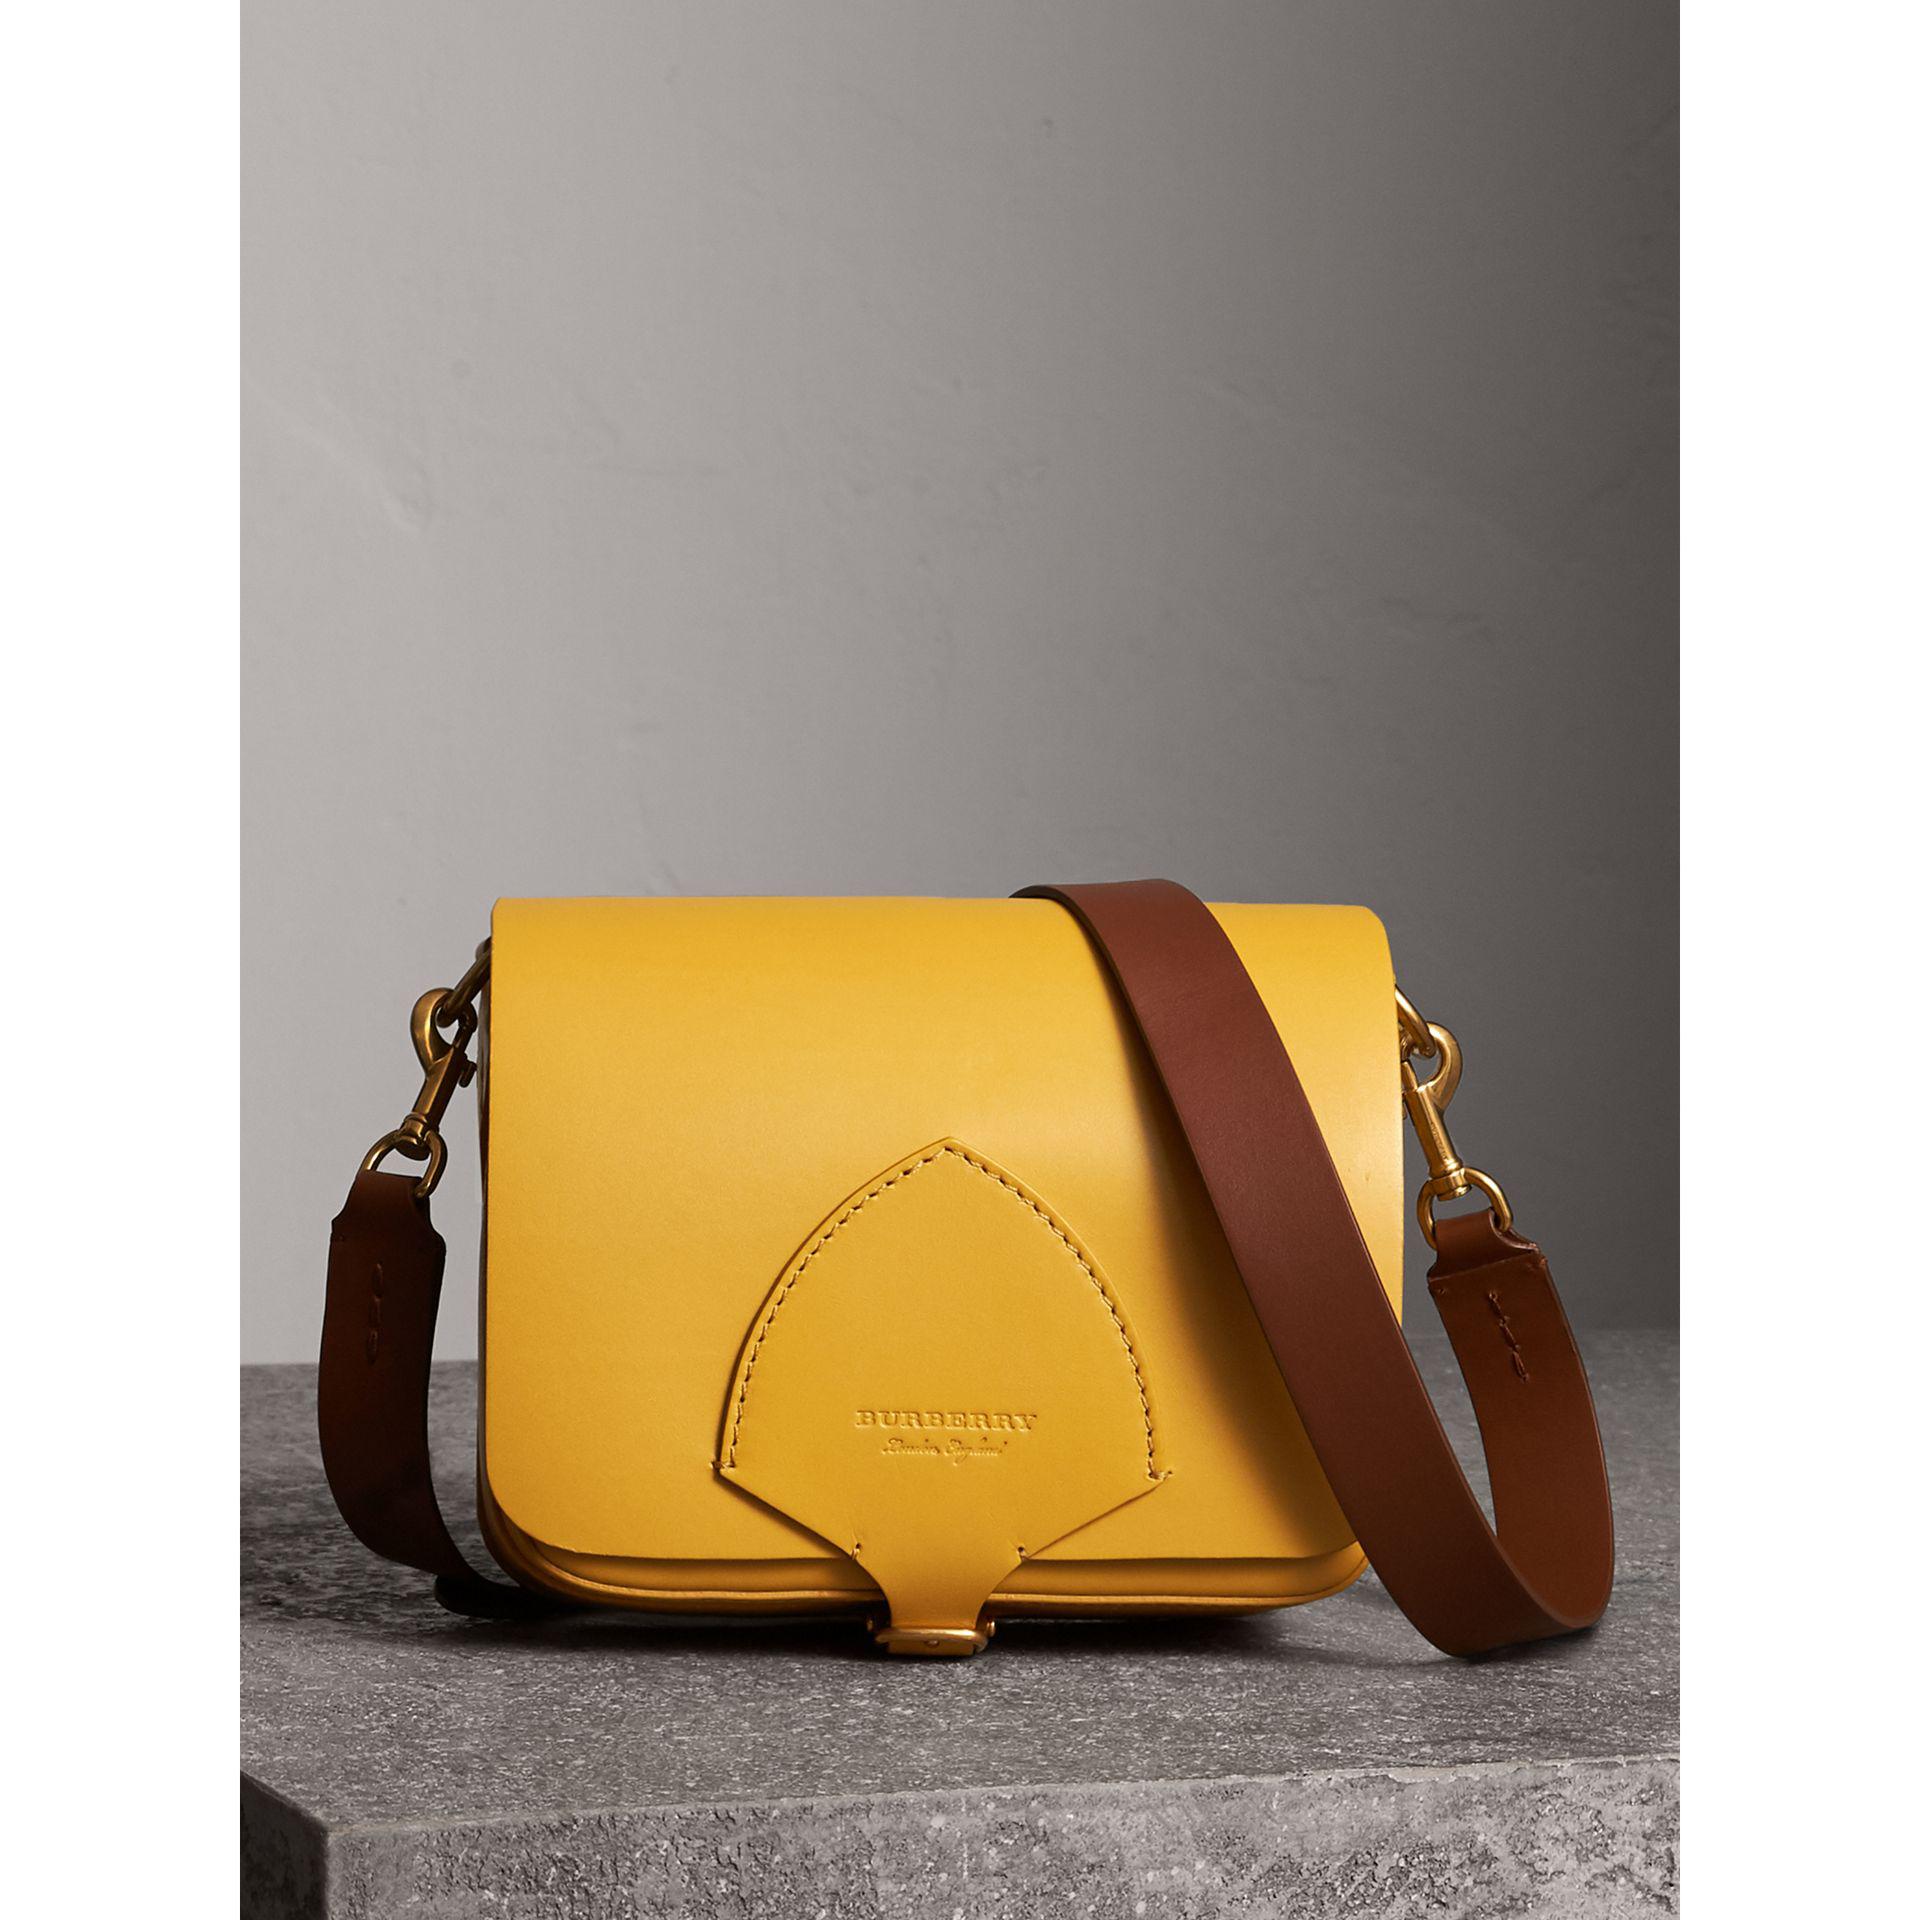 burberry square satchel